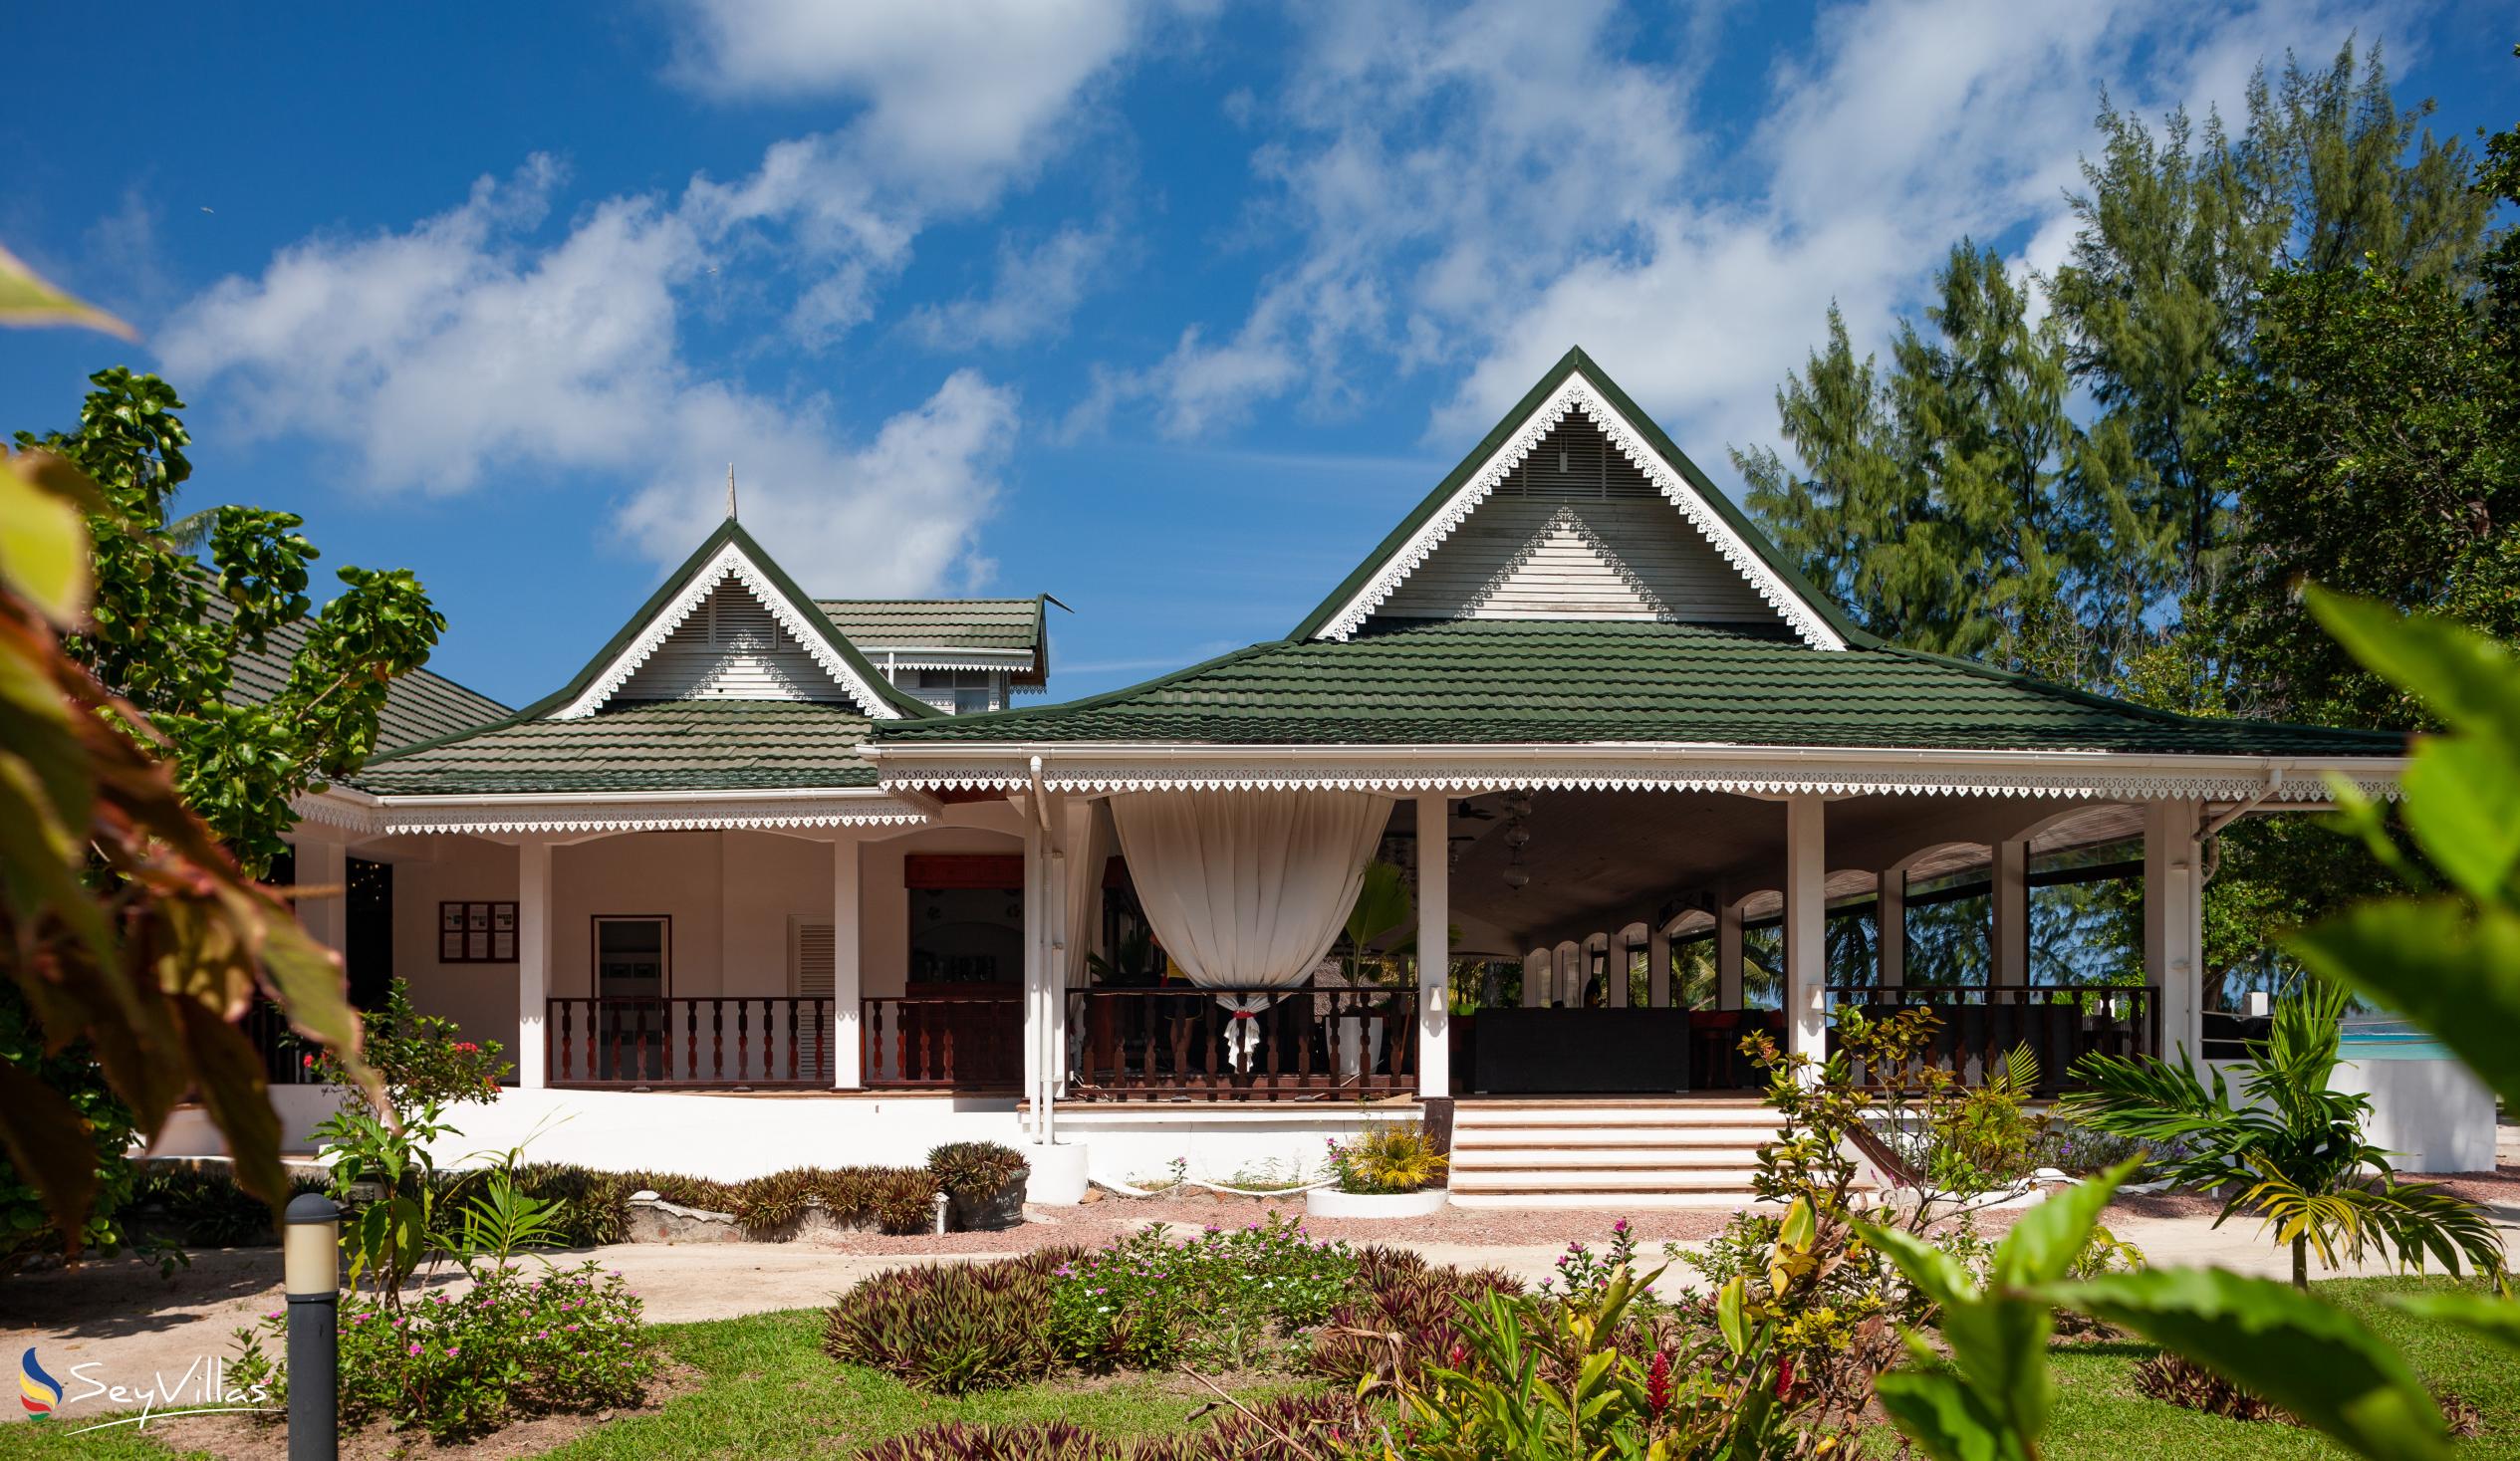 Photo 1: Hotel Cote D'Or Lodge - Outdoor area - Praslin (Seychelles)